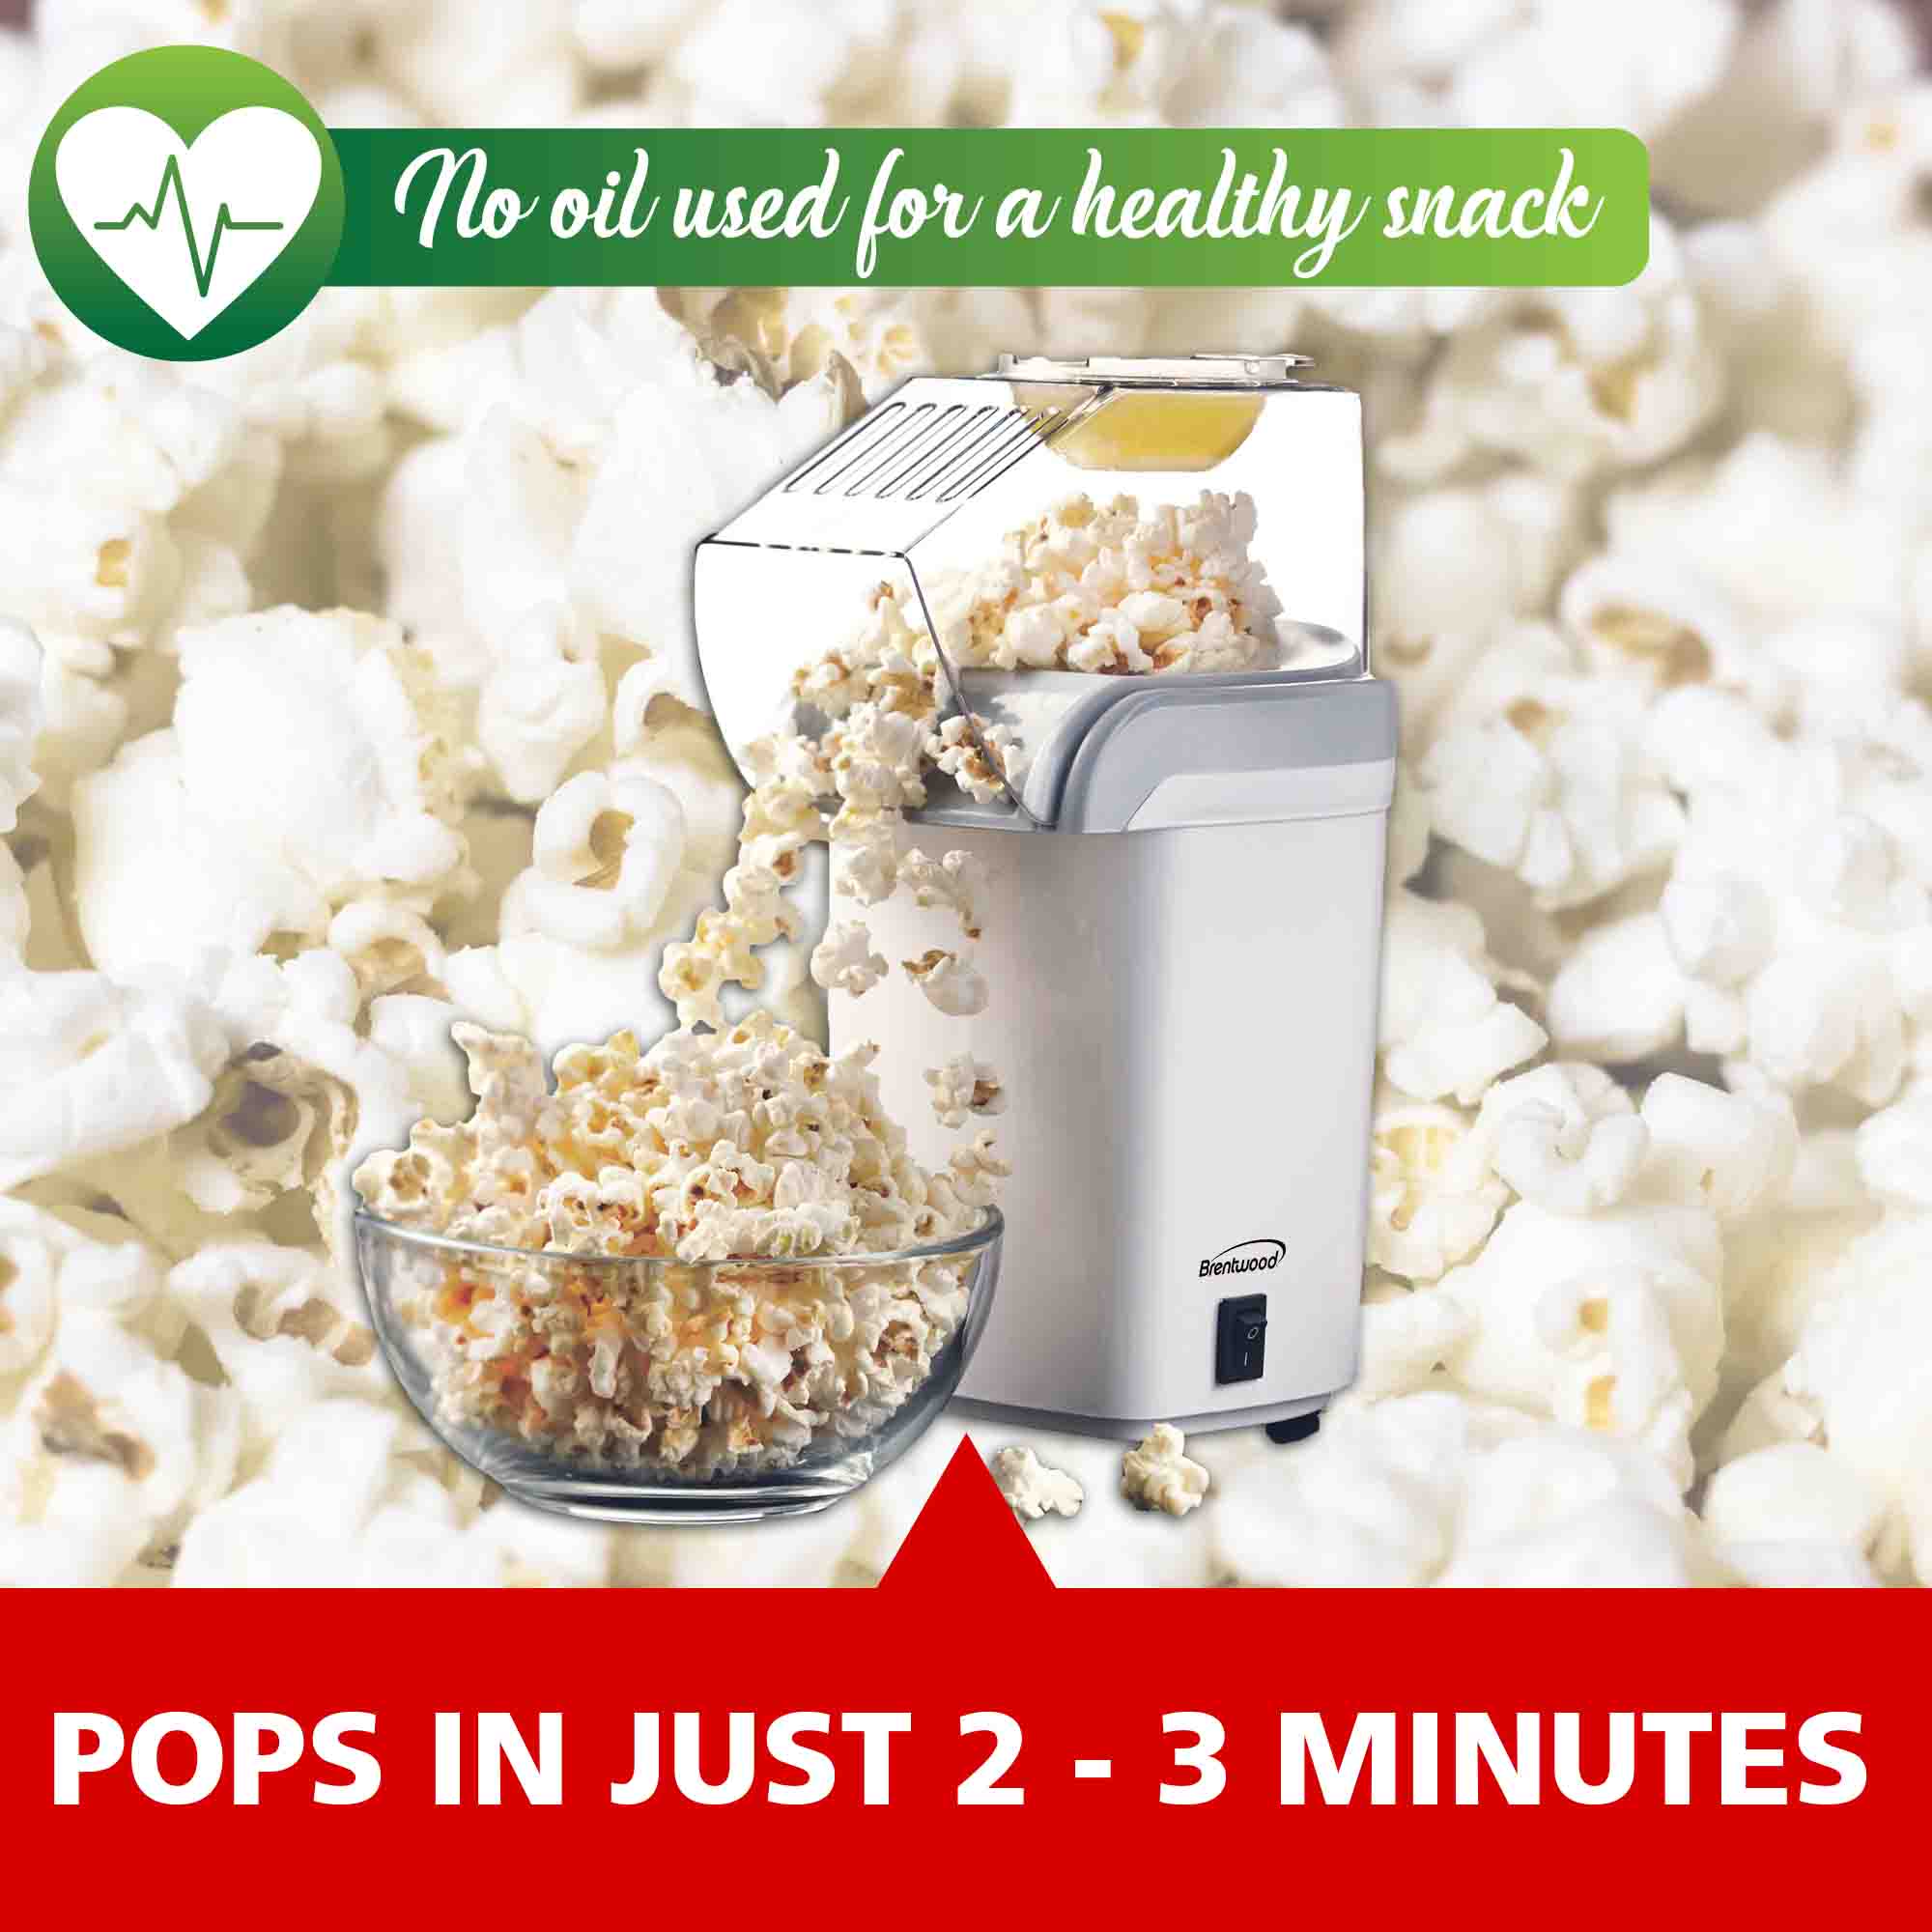 Popcorn Maker, Popcorn Machine, Hot Air Popcorn Maker, 3 Minutes